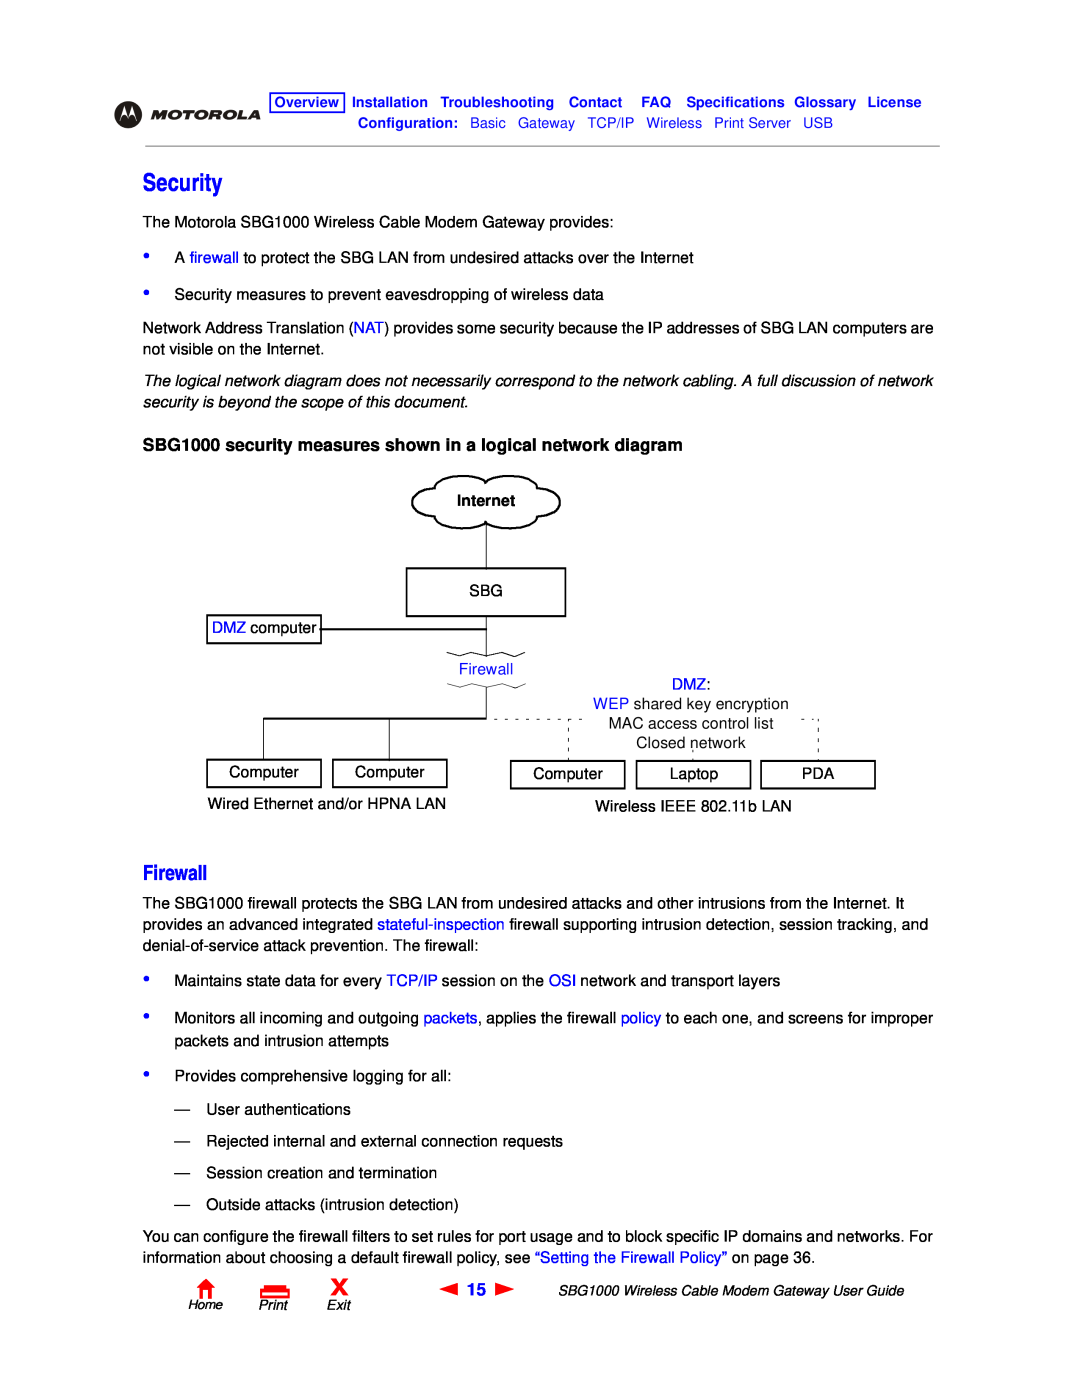 Motorola manual Security, SBG1000 security measures shown in a logical network diagram, Internet, Firewall DMZ 